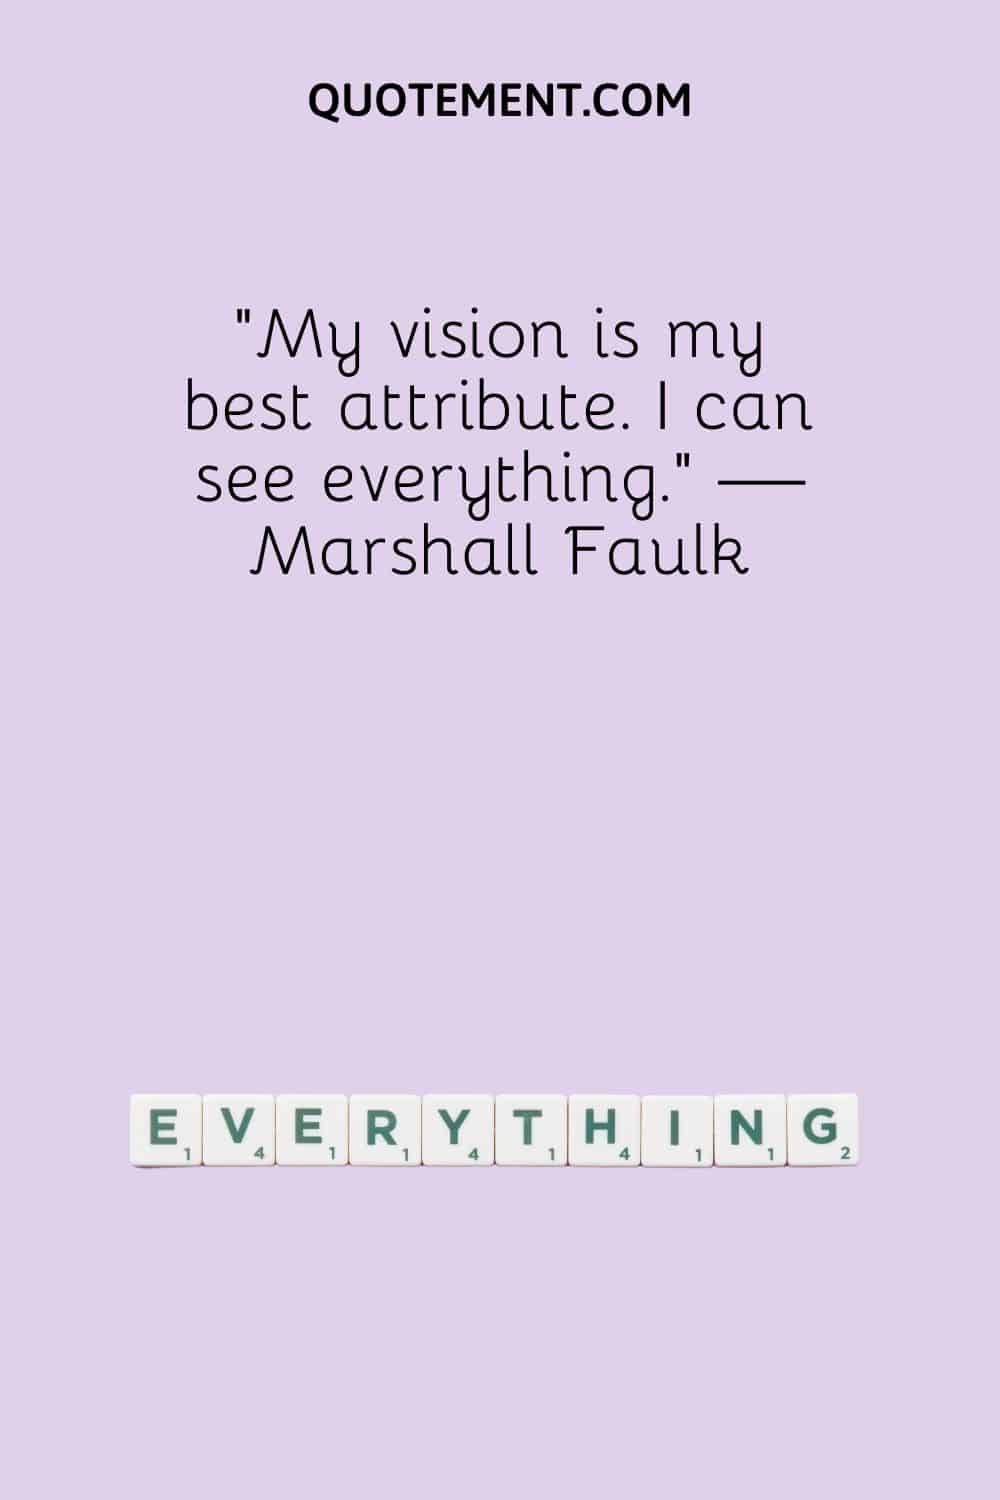 My vision is my best attribute.